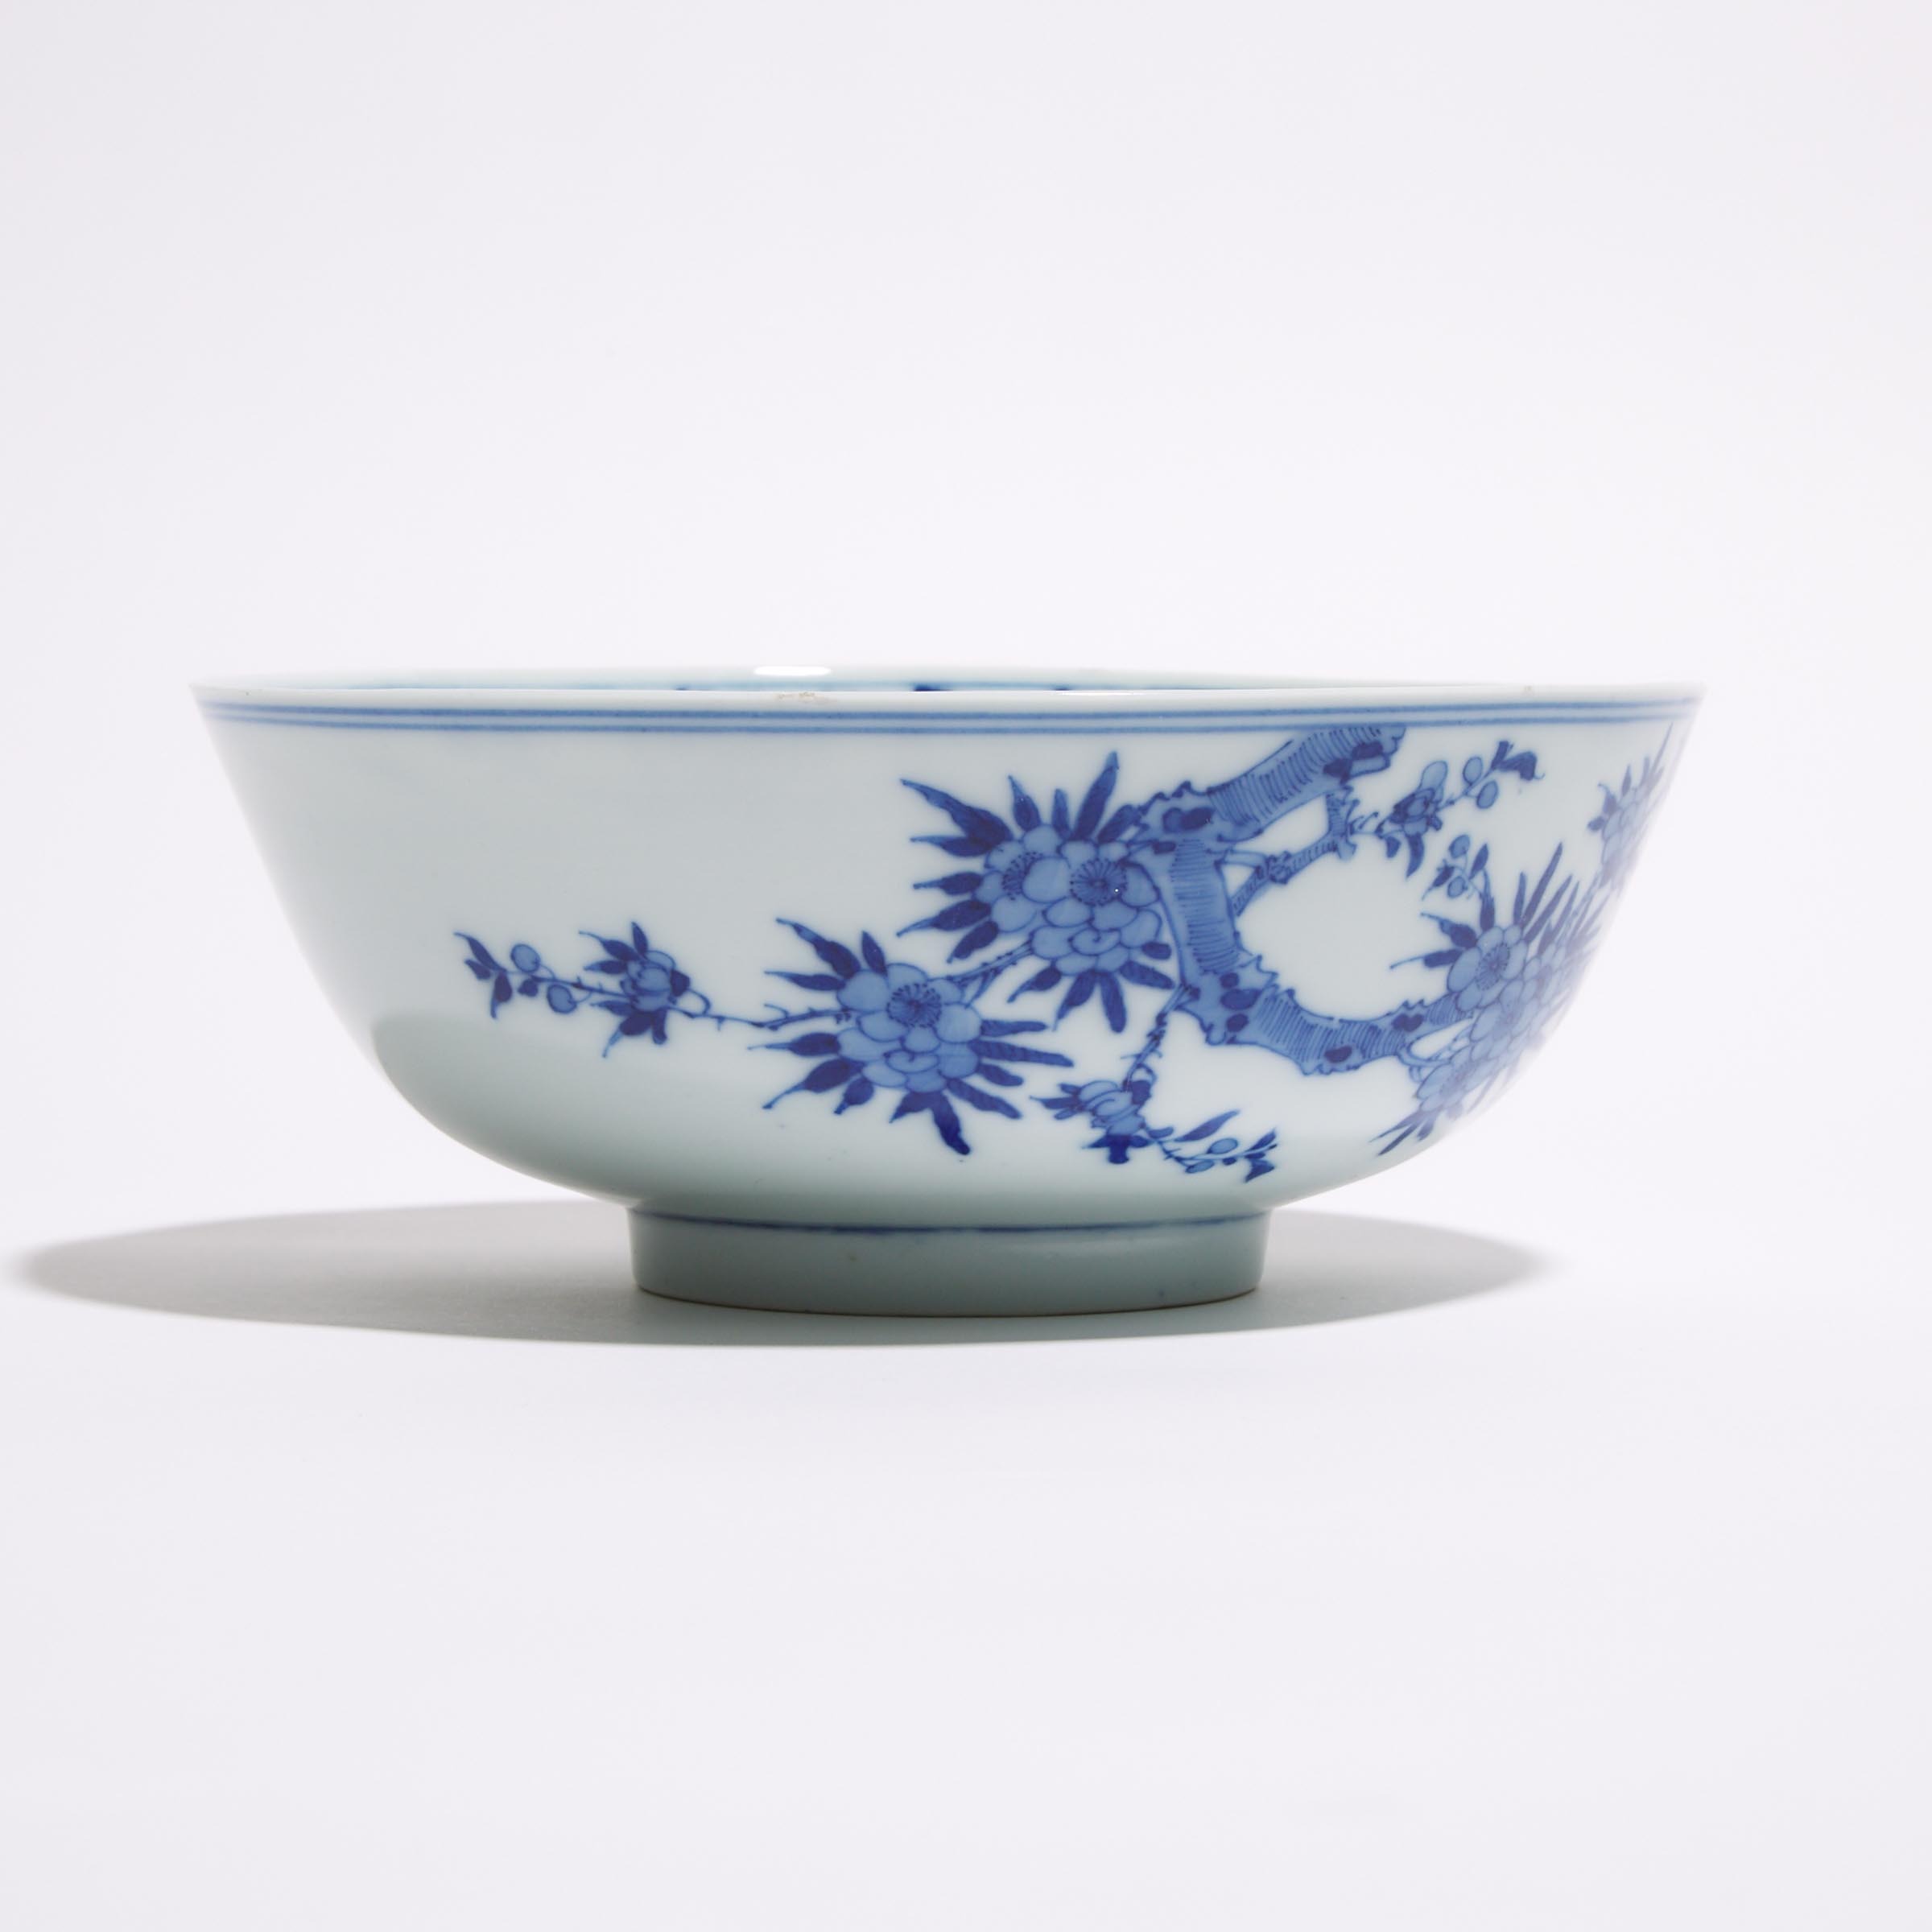 A Blue and White 'Bird and Flower' Bowl, Kangxi Mark, Qianlong Period